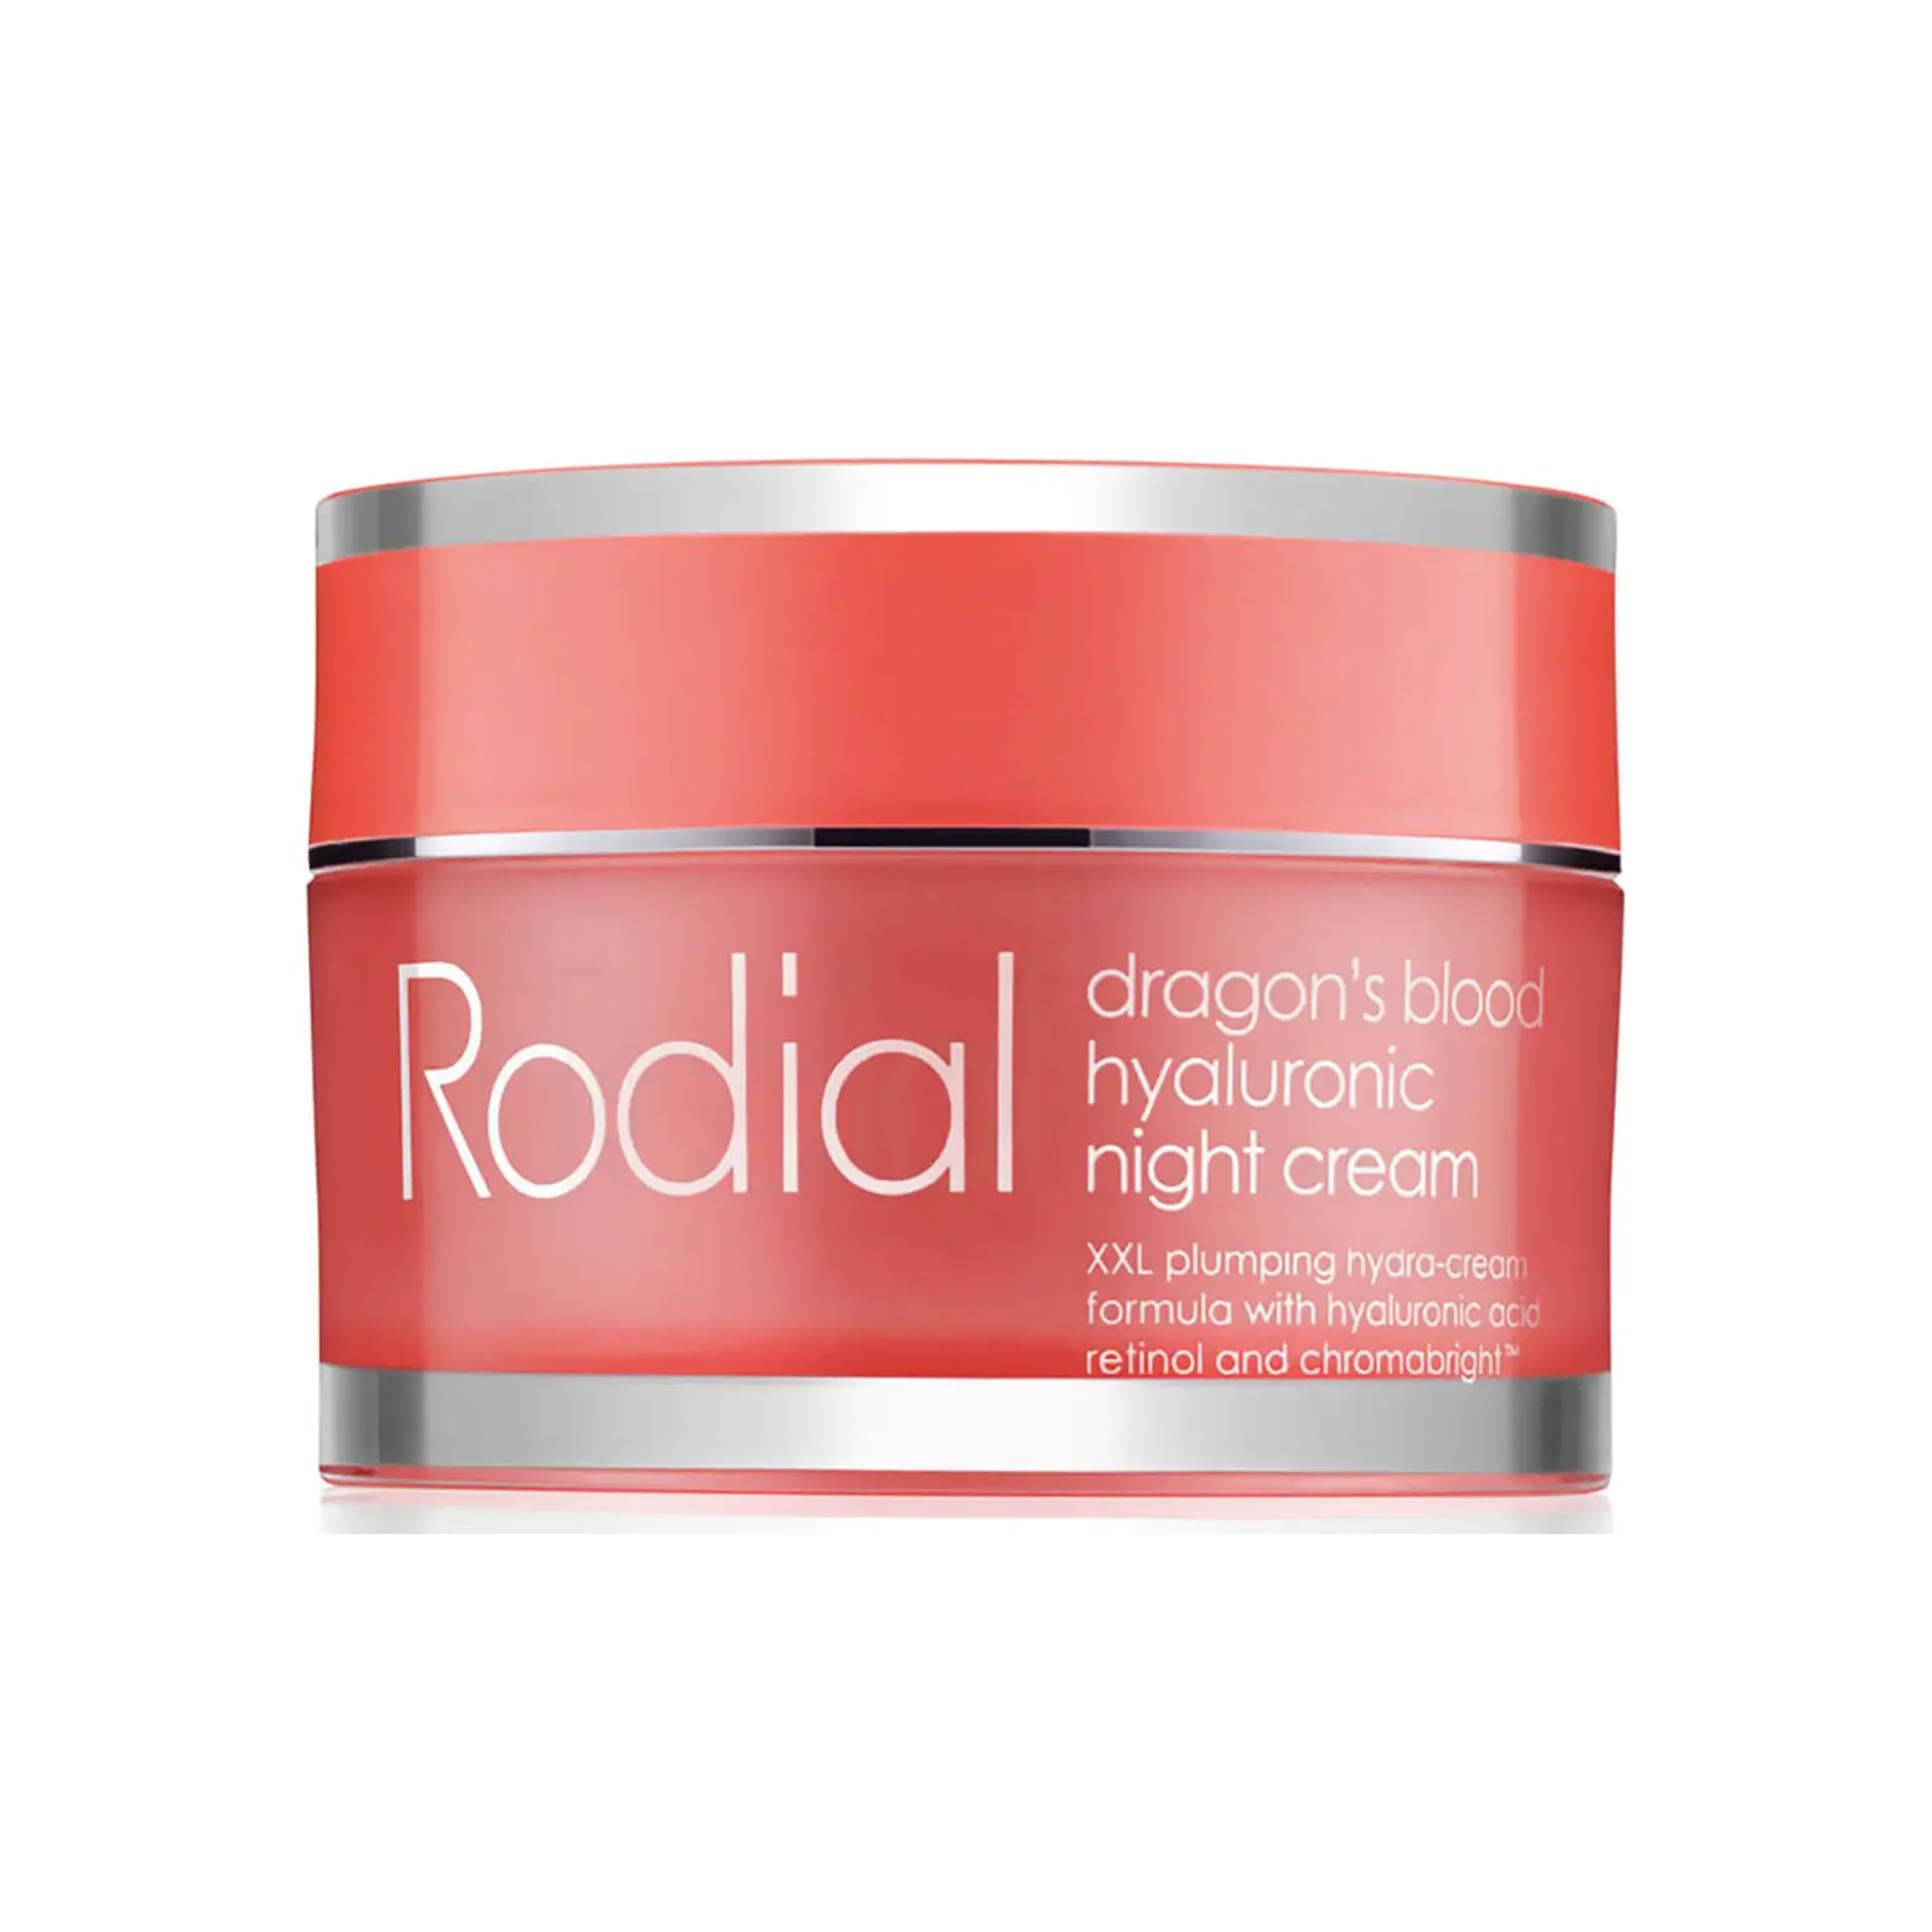 Rodial Dragon's Blood Night Hyaluronic Cream / 1.6OZ